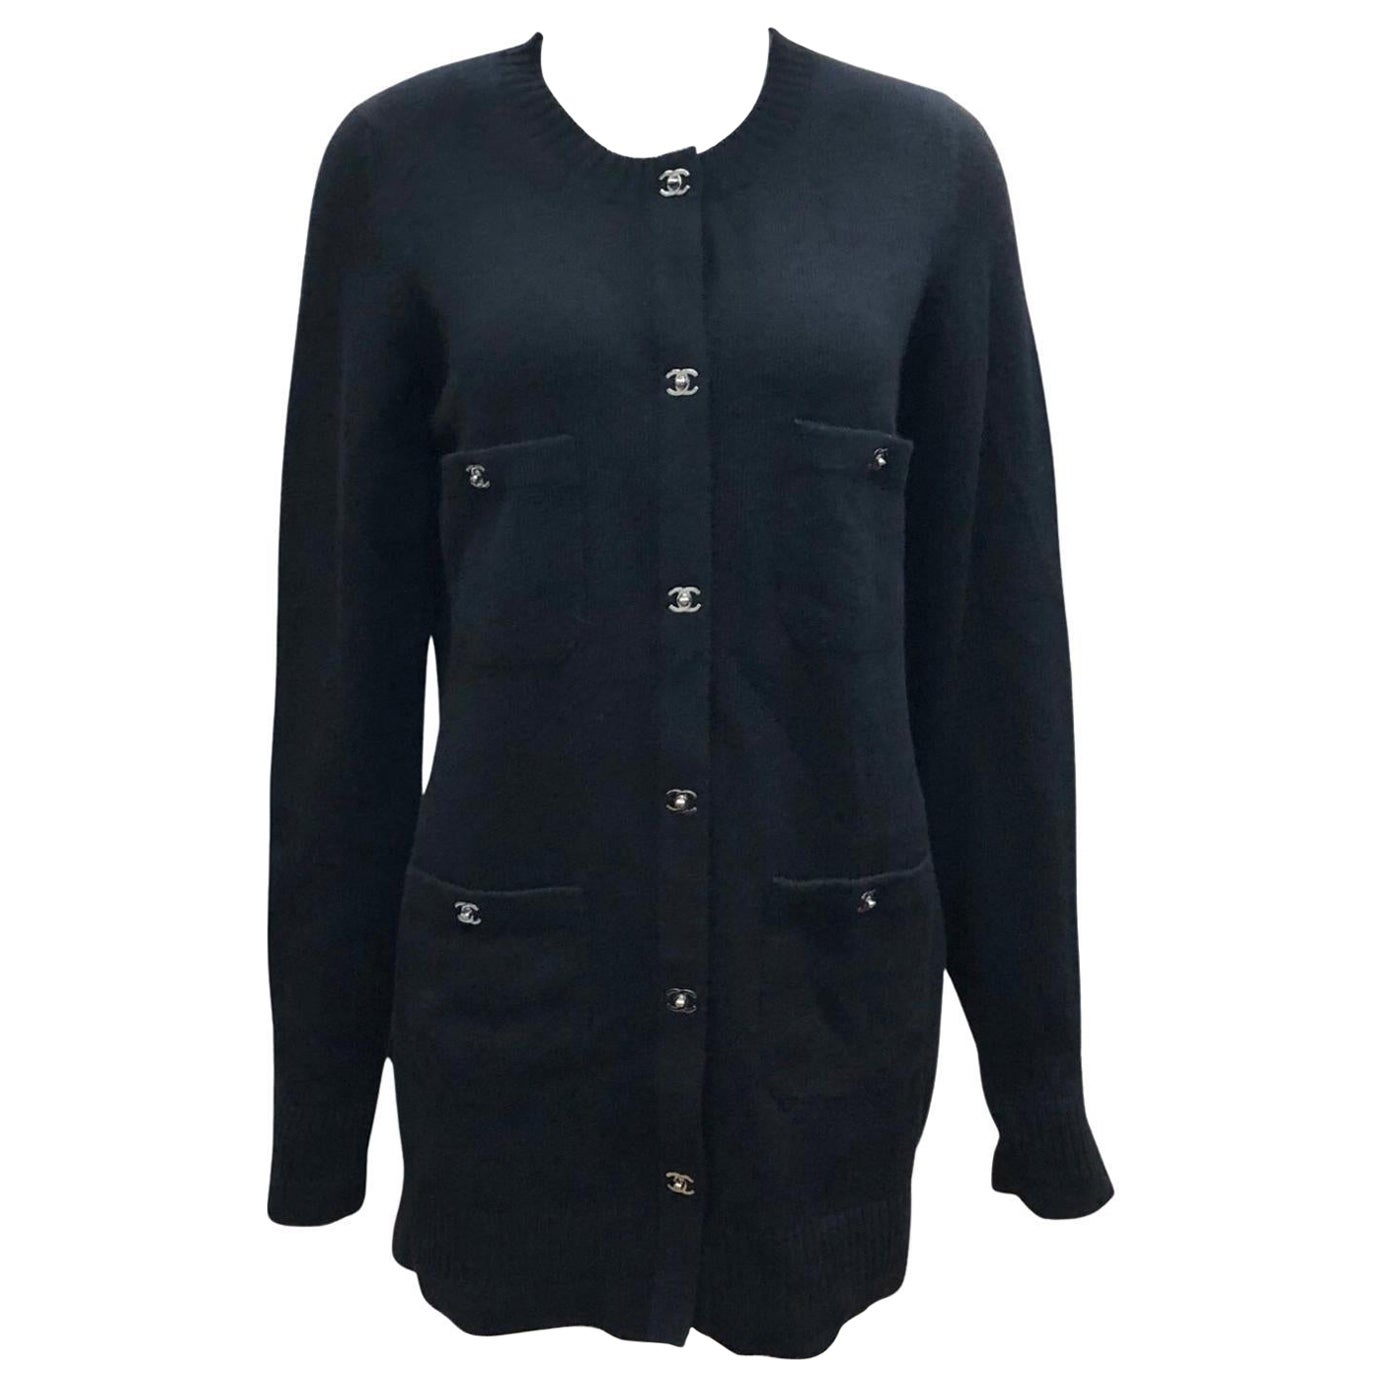 Chanel Cr95 #38 Cc Button Ensemble Cardigan Tops 100% Cashmere Black